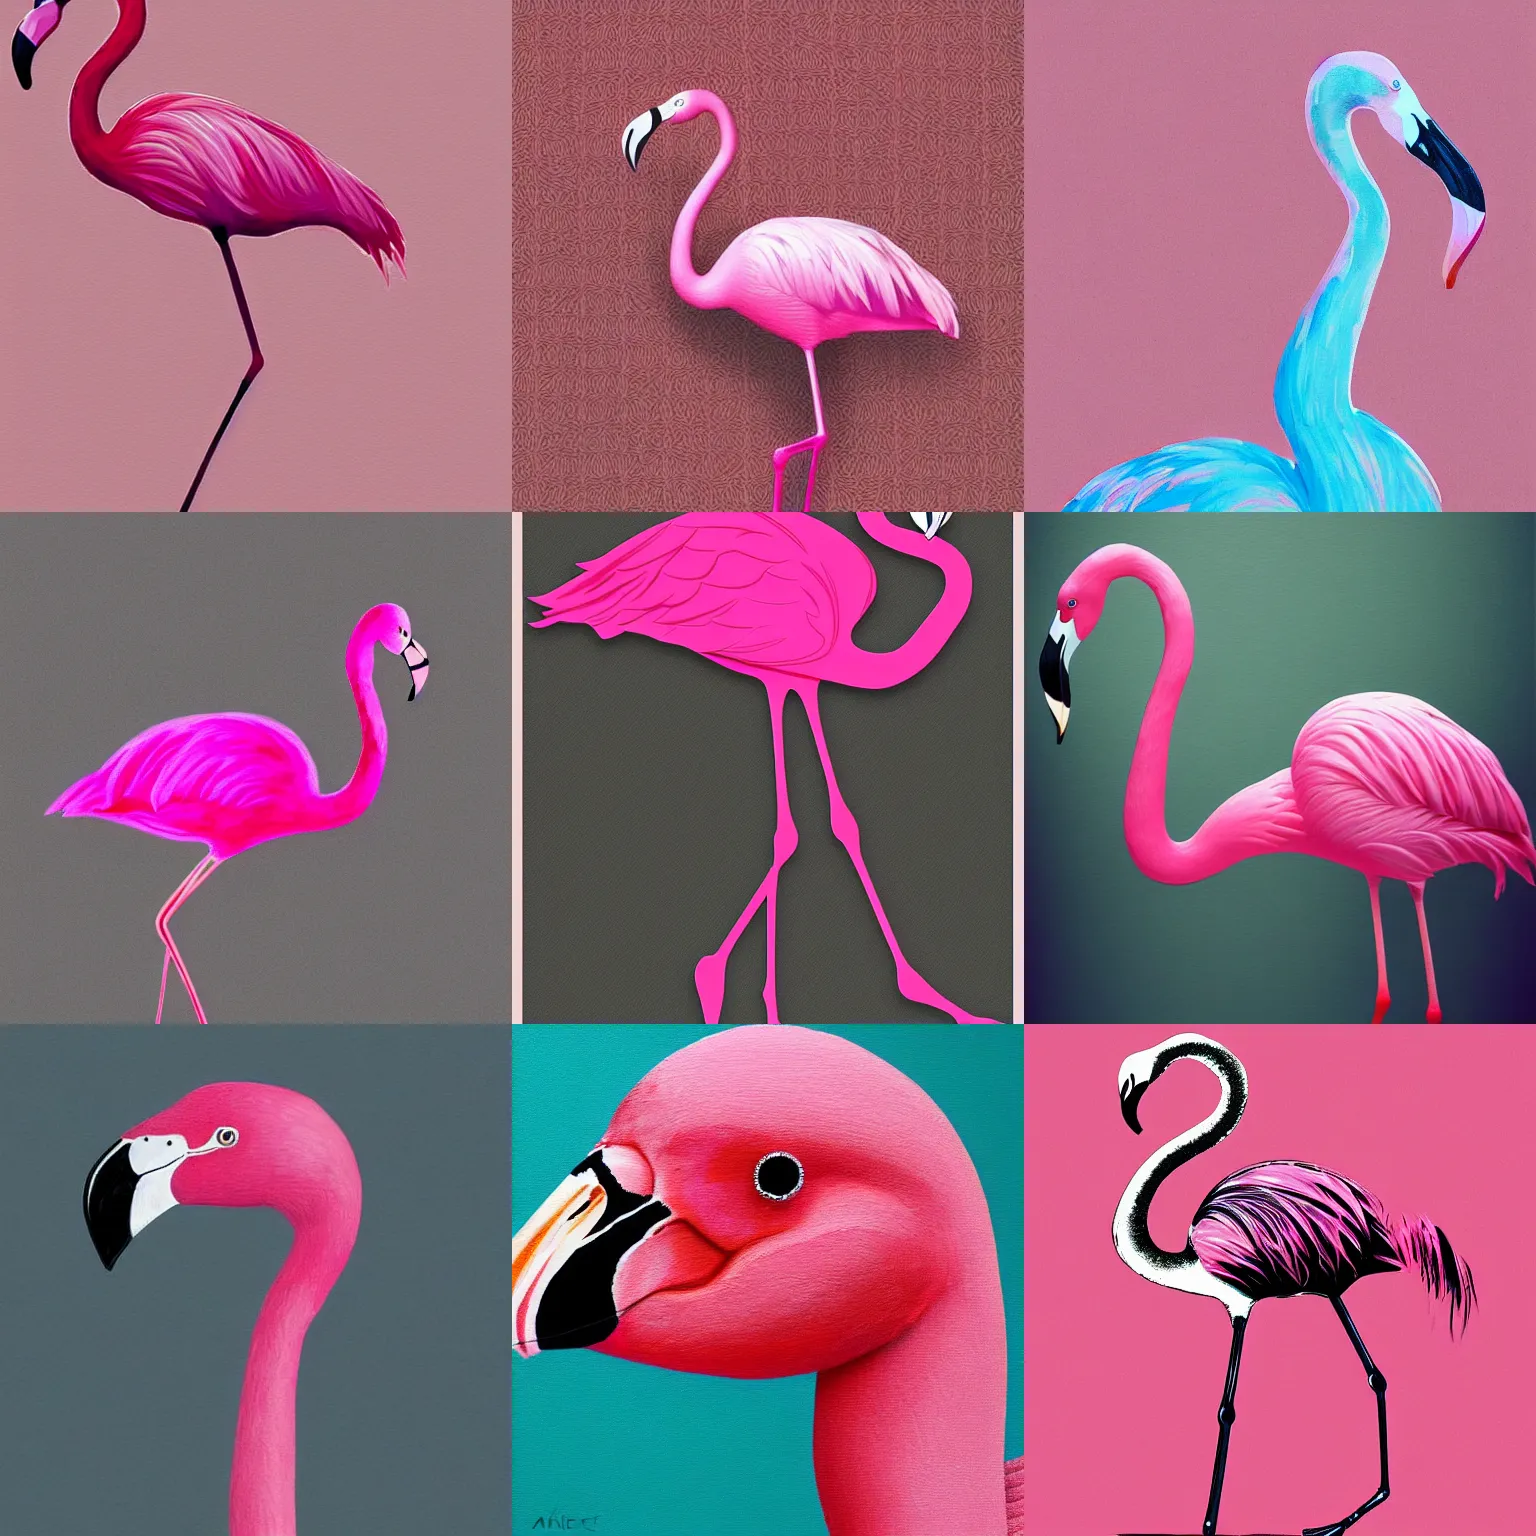 Prompt: a pink flamingo, wearing an atef, highly intricate, award winning art, trending on artstation